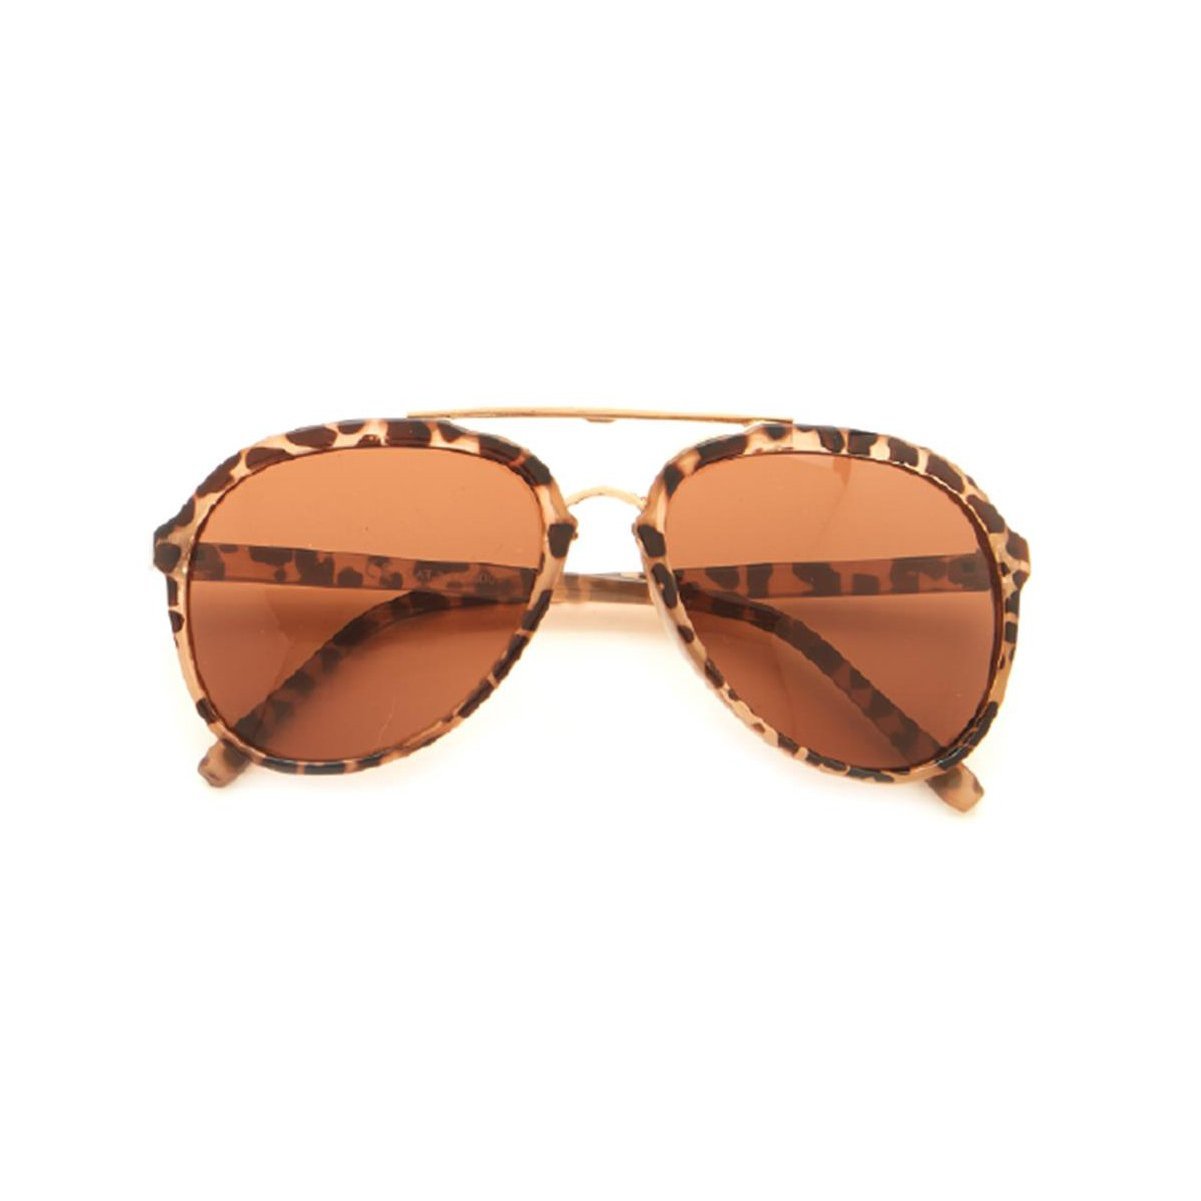 Tortoise Frame Sunglasses /Assorted 3 Styles